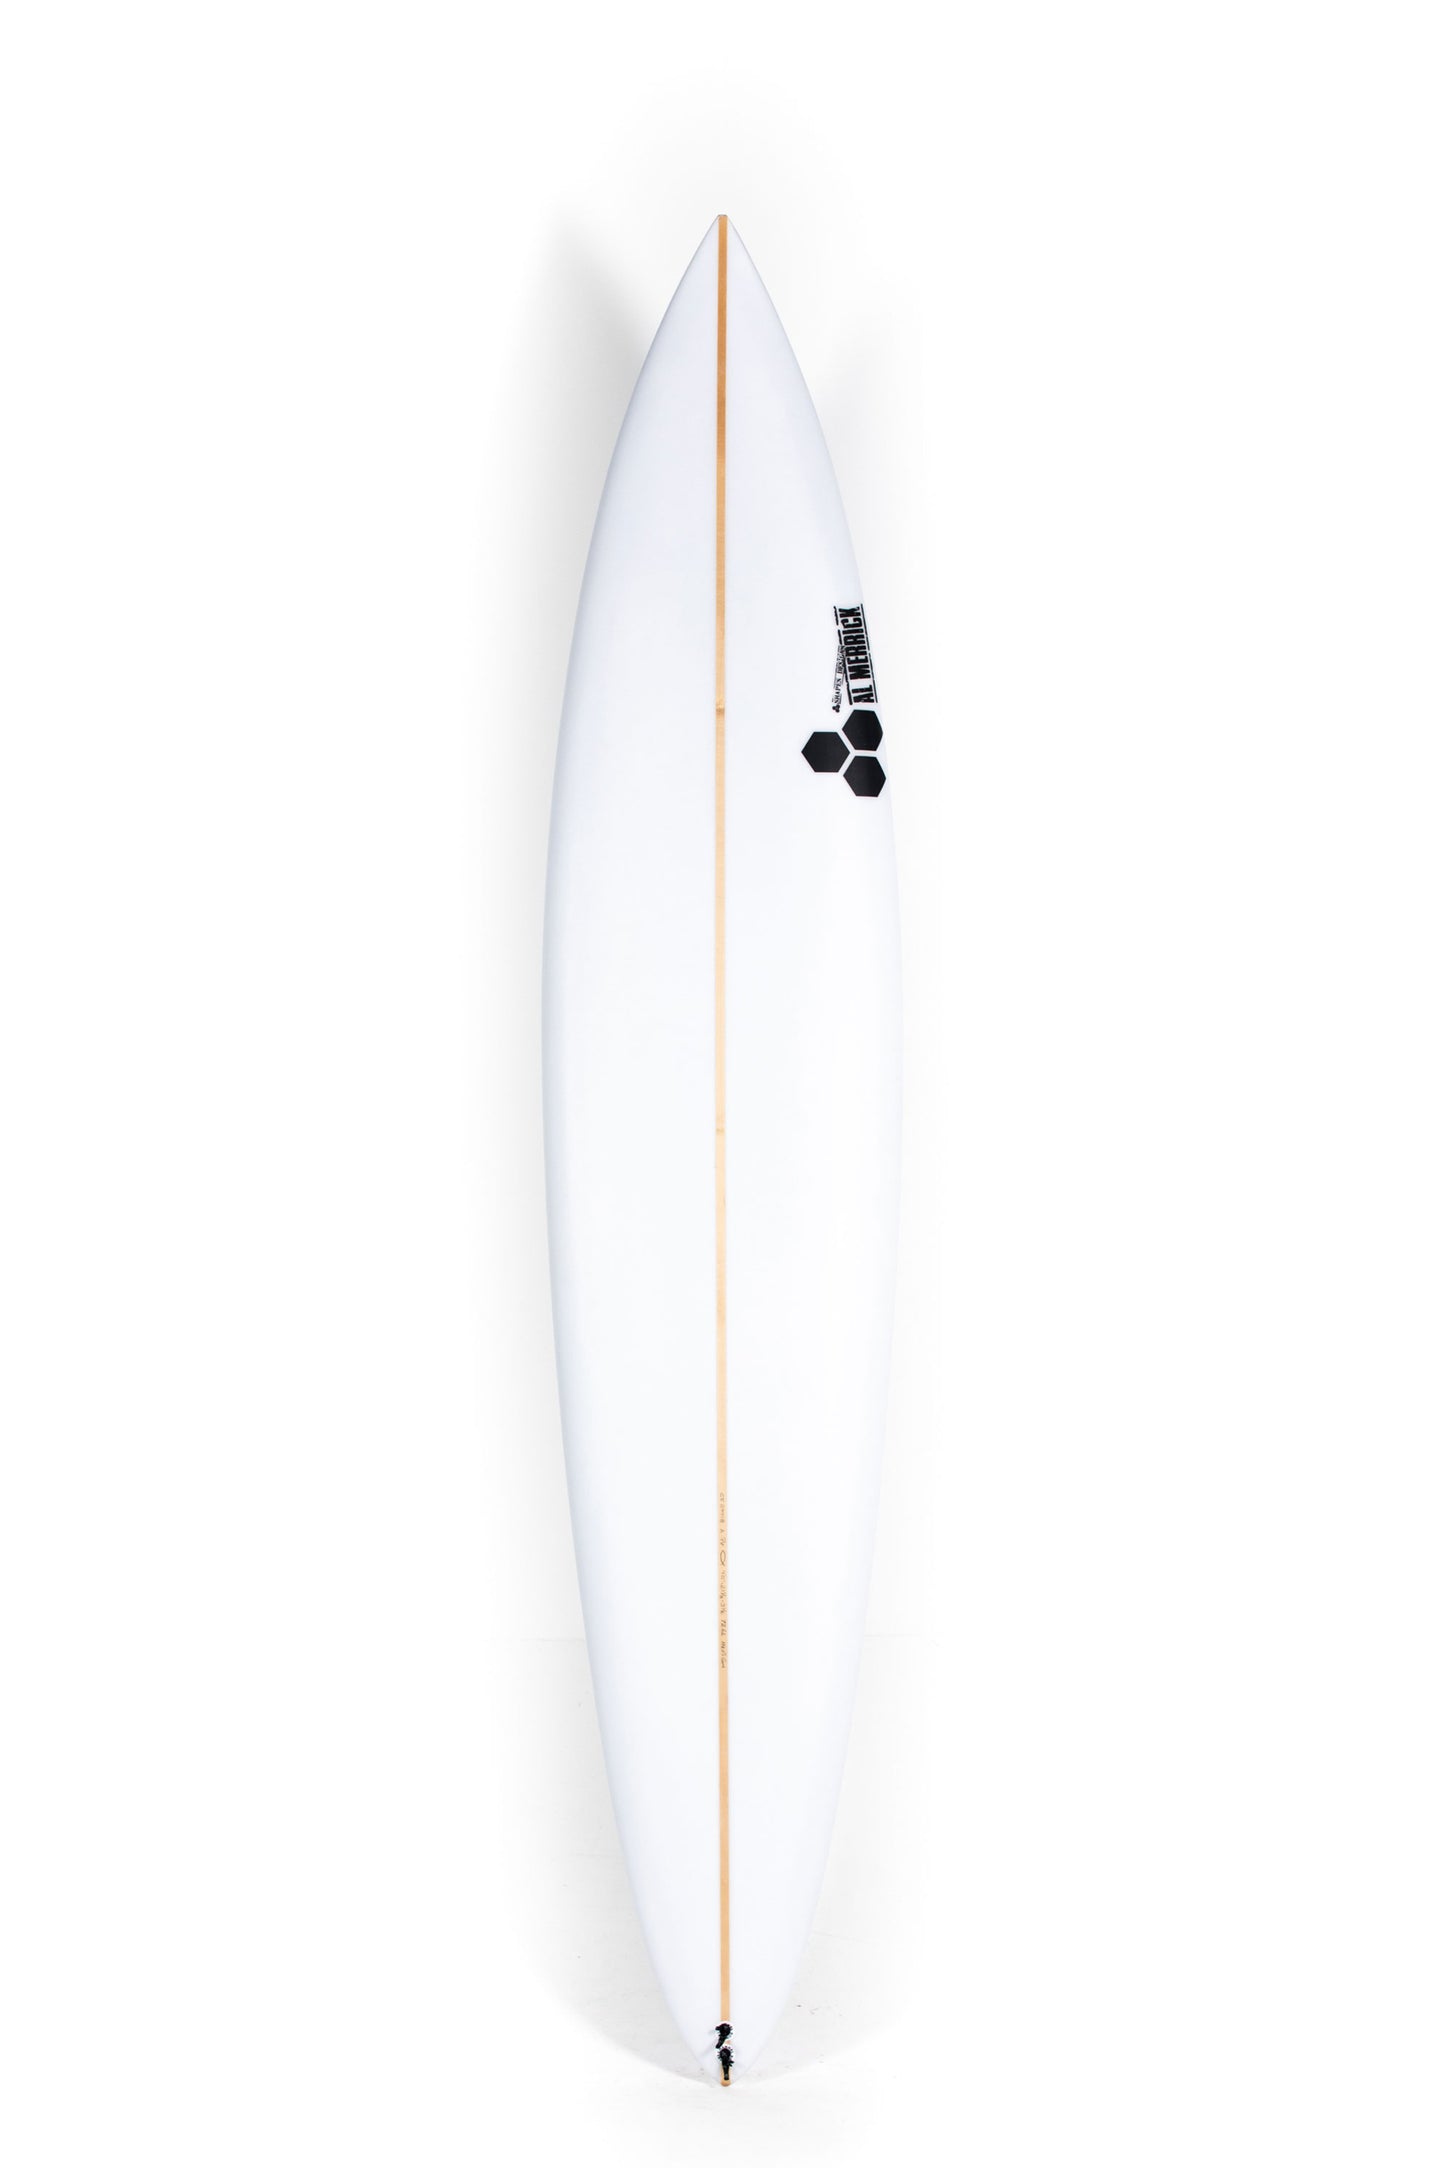 Pukas-Surf-Shop-Channel-Island-Surfboards-Mavs-Gun-Al-Merrick-9_0